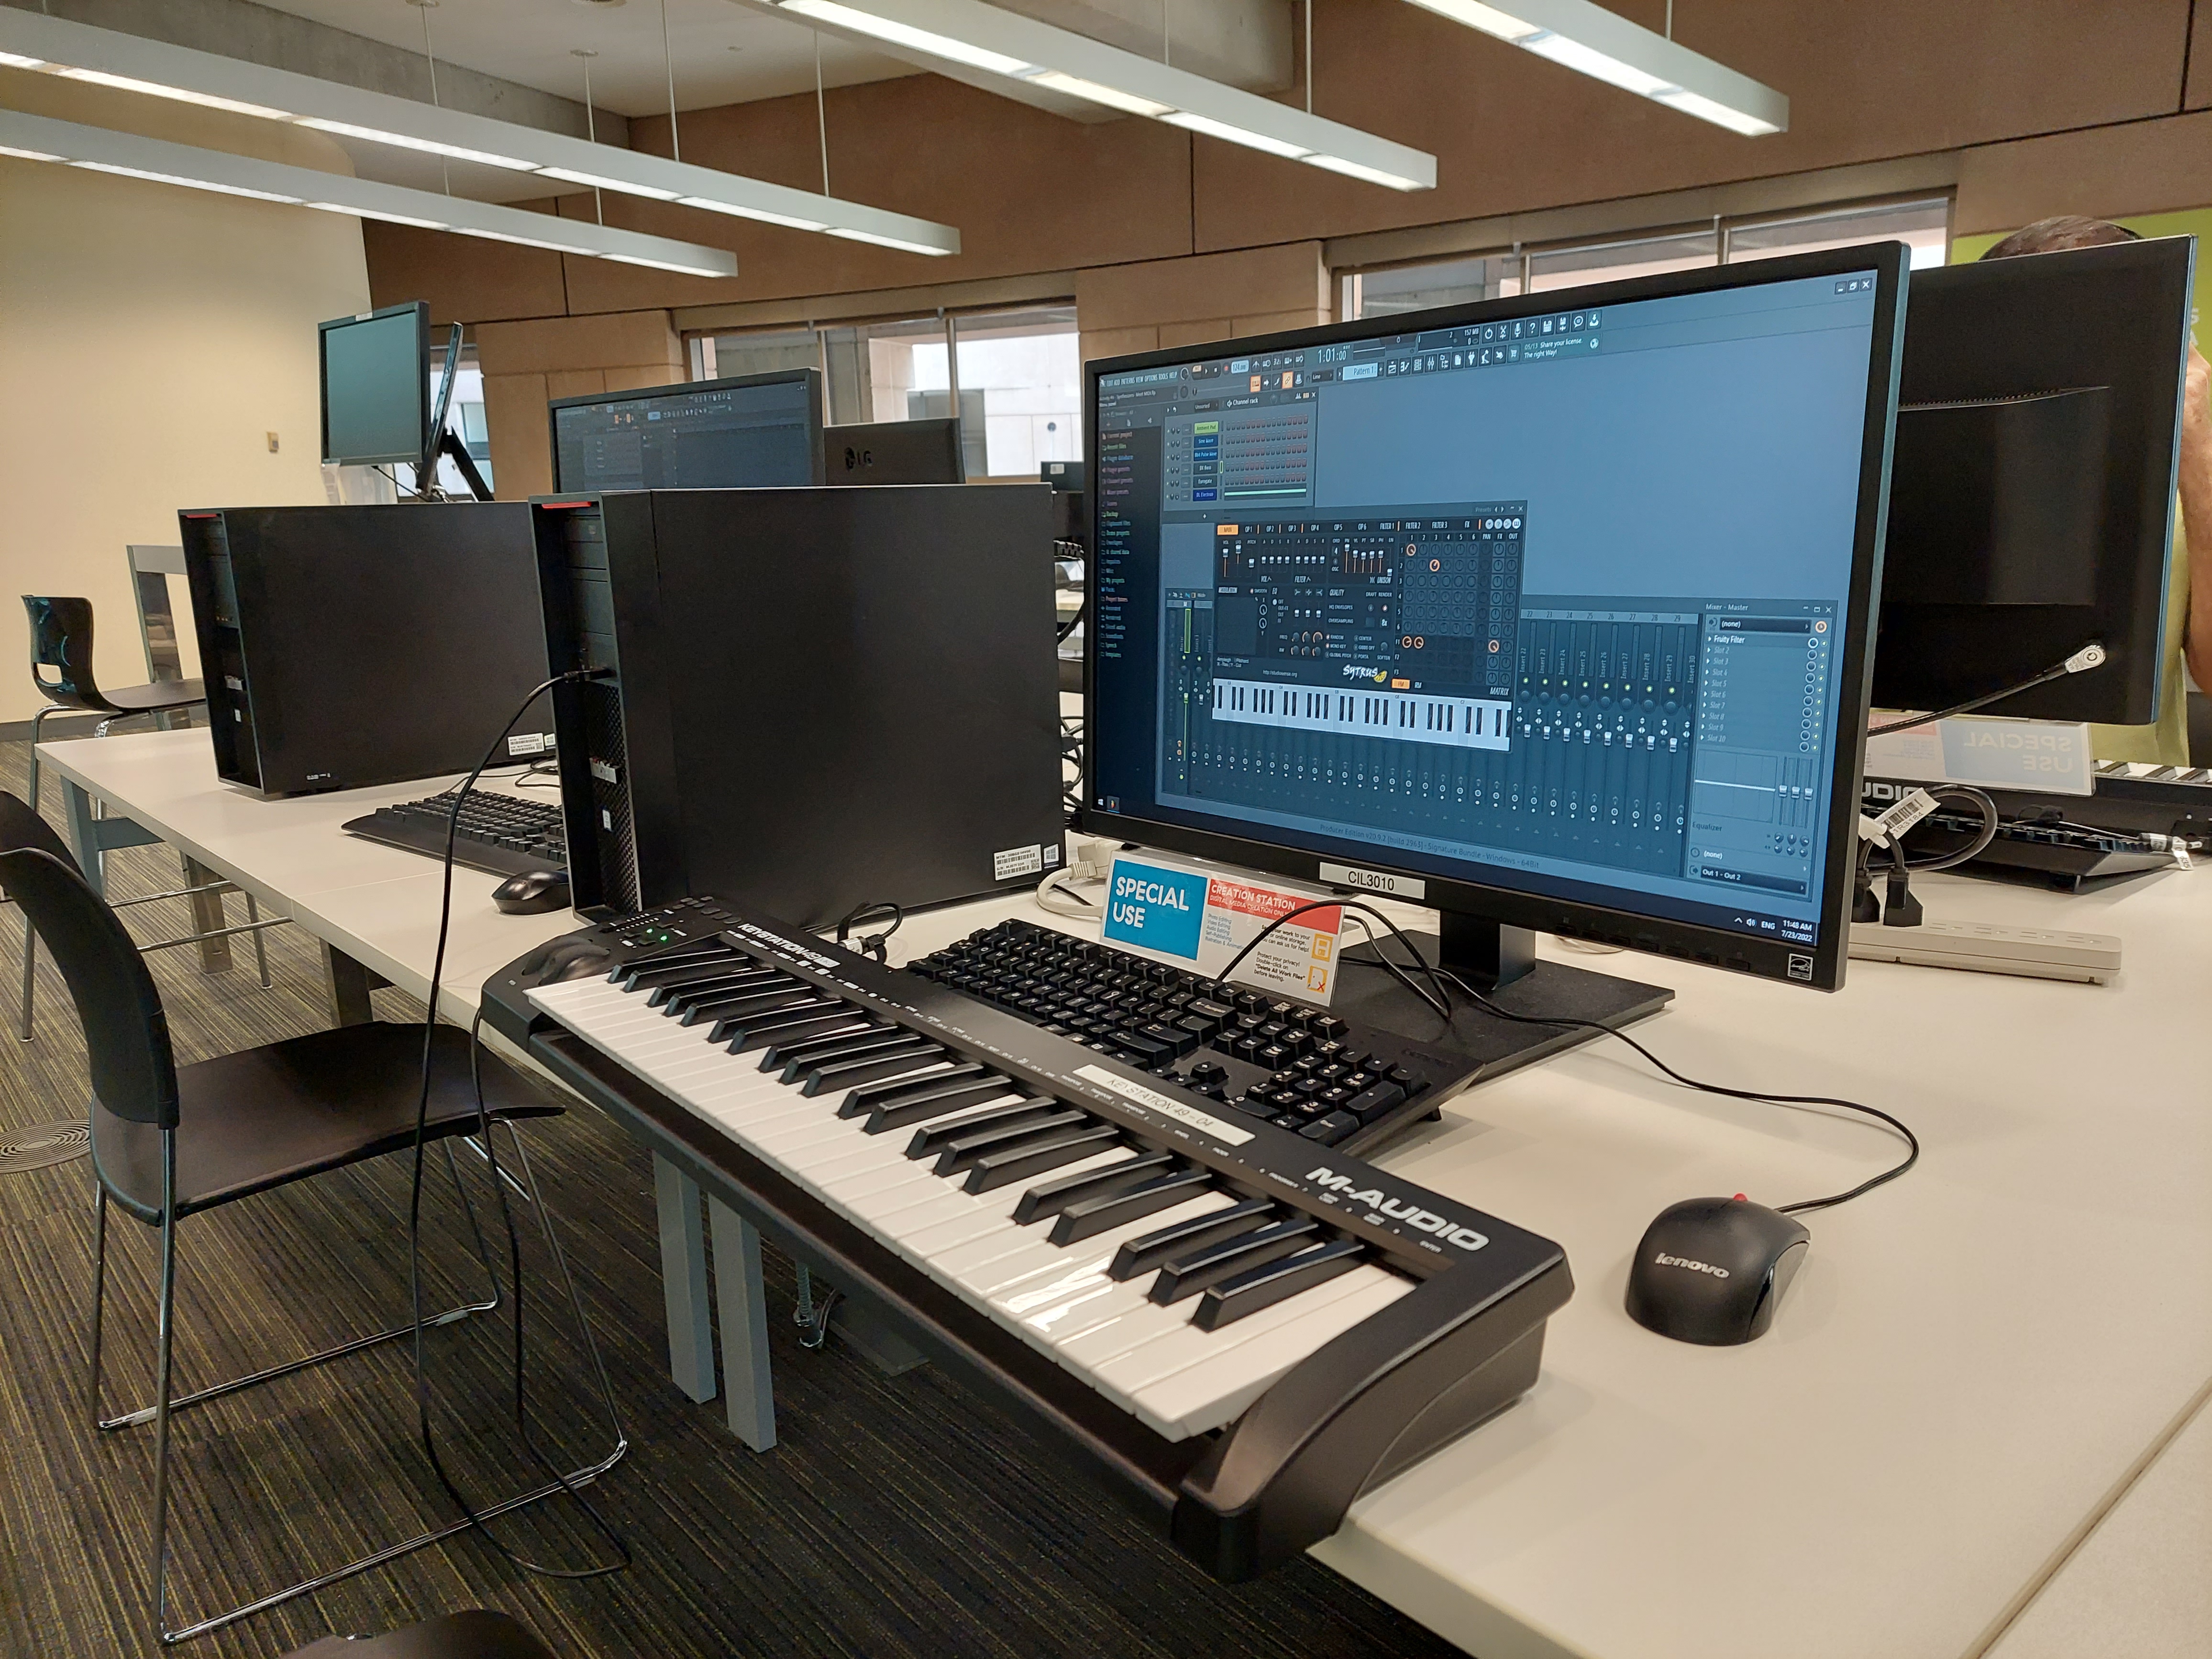 MIDI keyboard in the Inspiration Lab